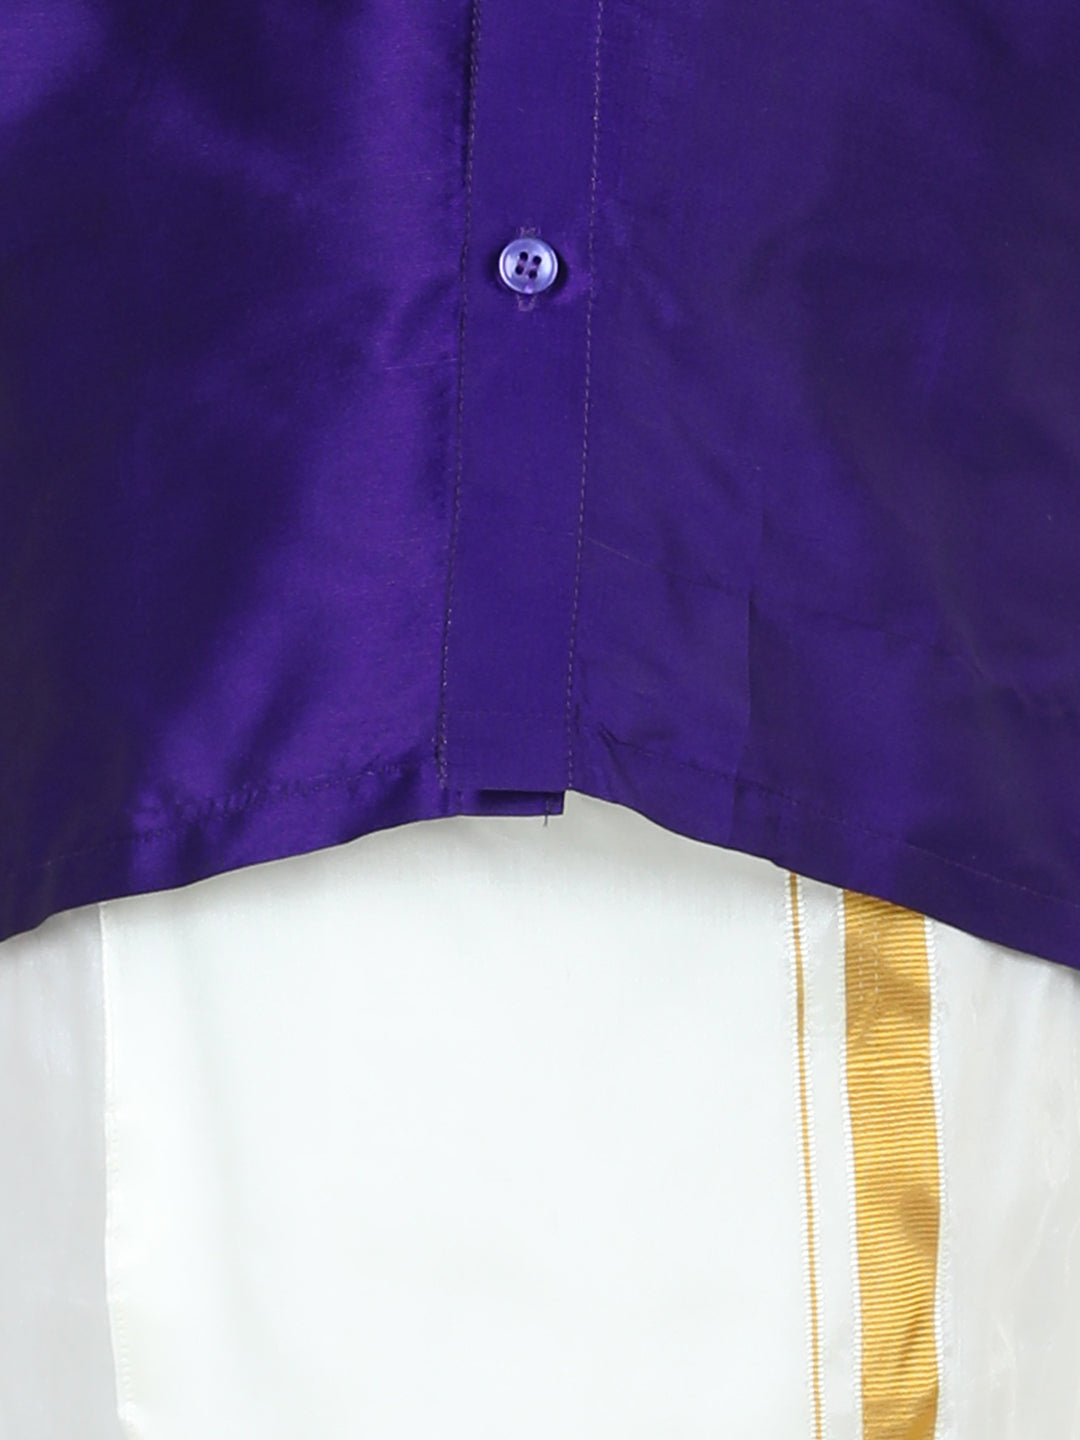 BownBee Half Sleeves Solid Shirt With Mundu Dhoti - Purple